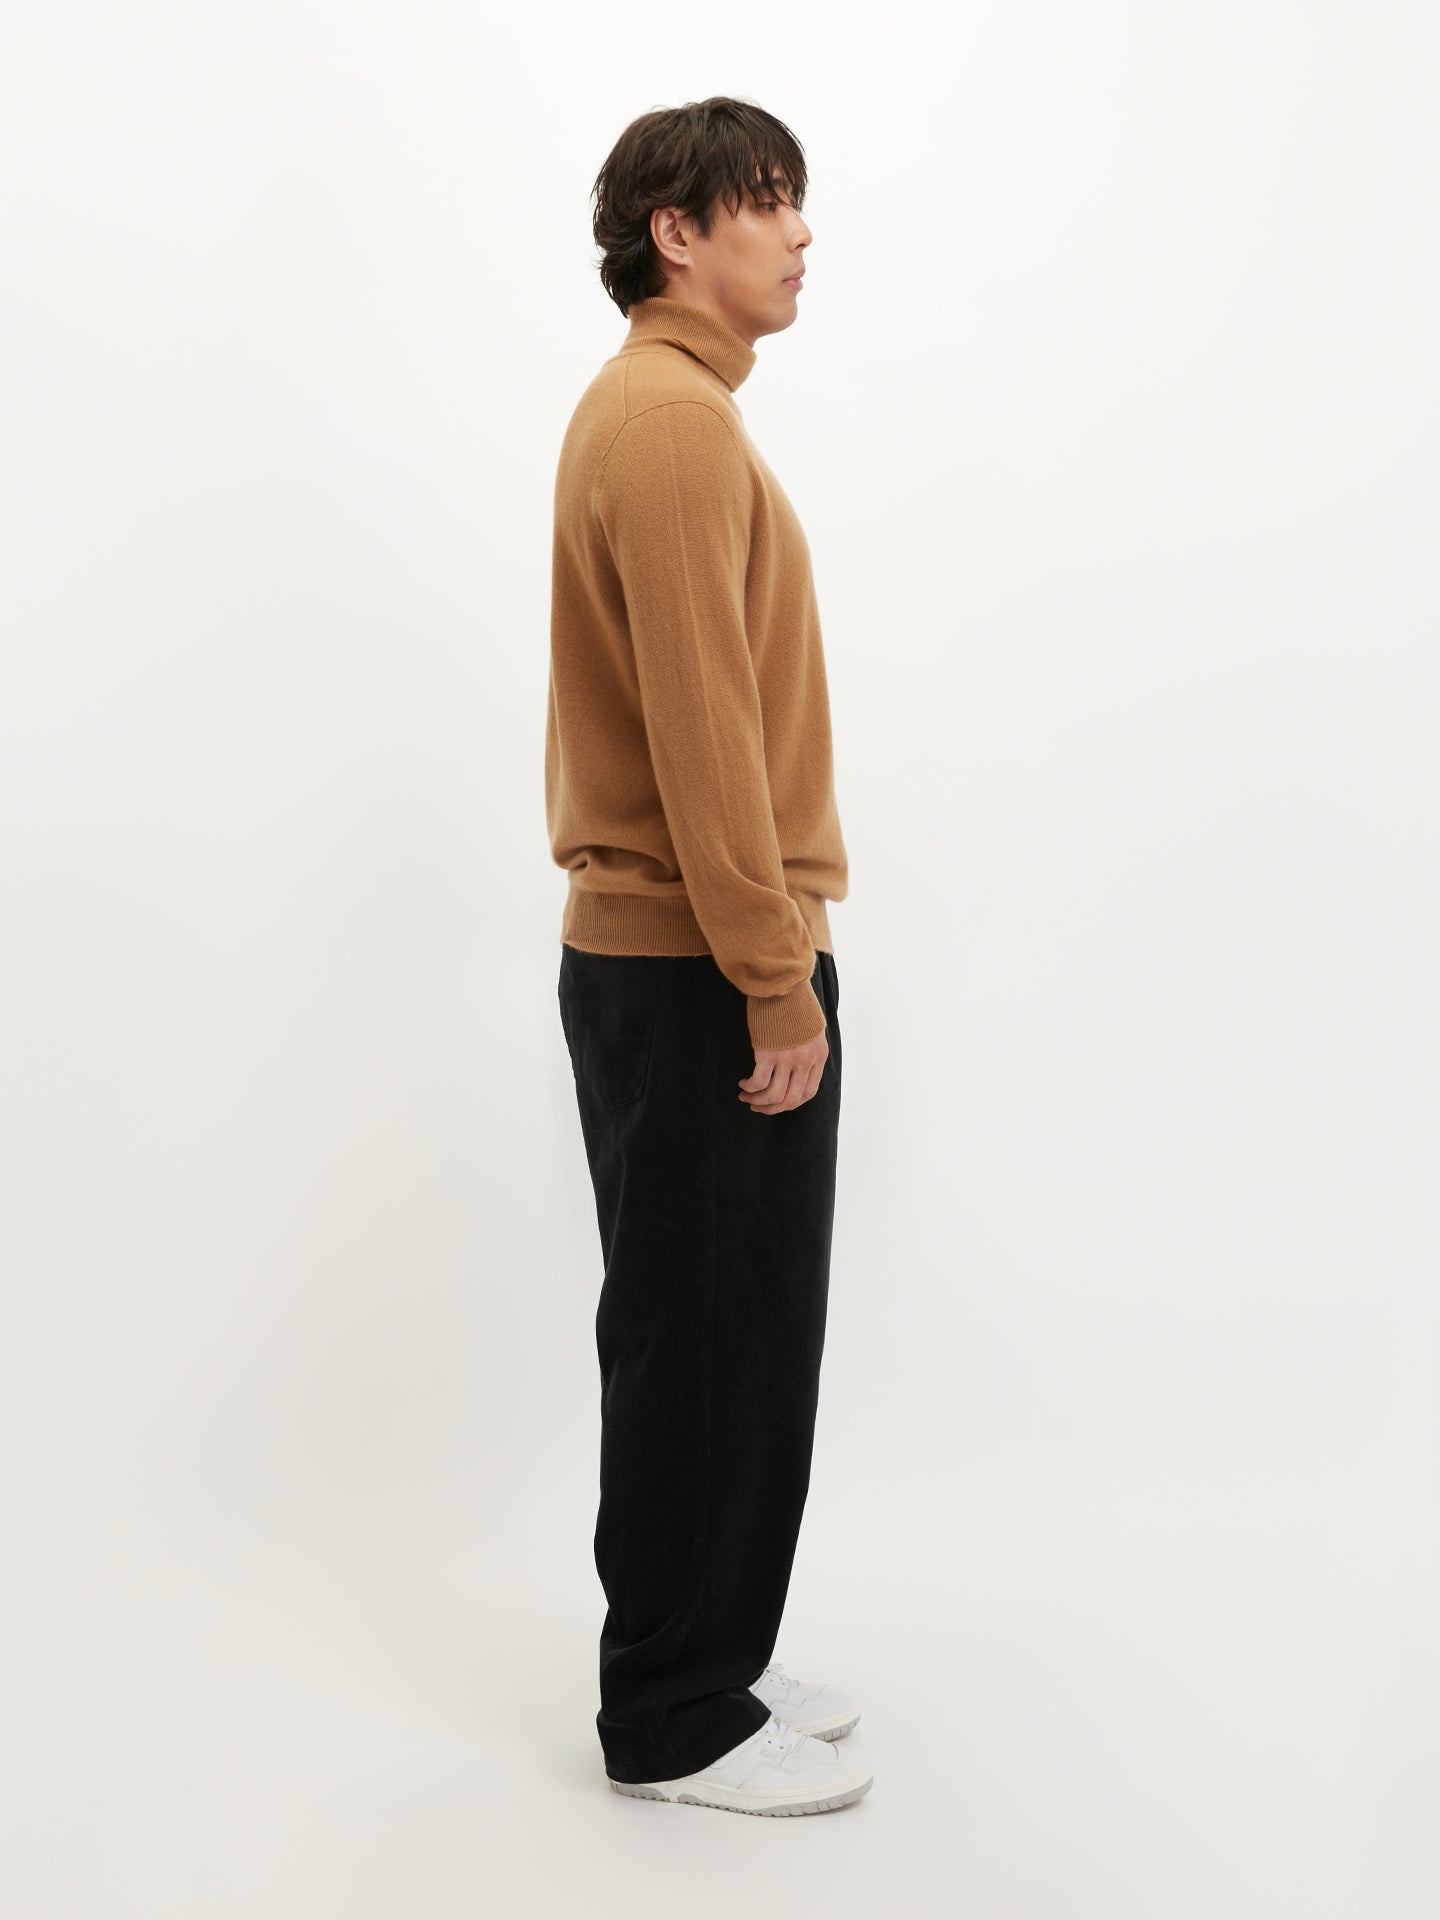 Men's Cashmere Basic Turtle Neck Sweater Almond - Gobi Cashmere